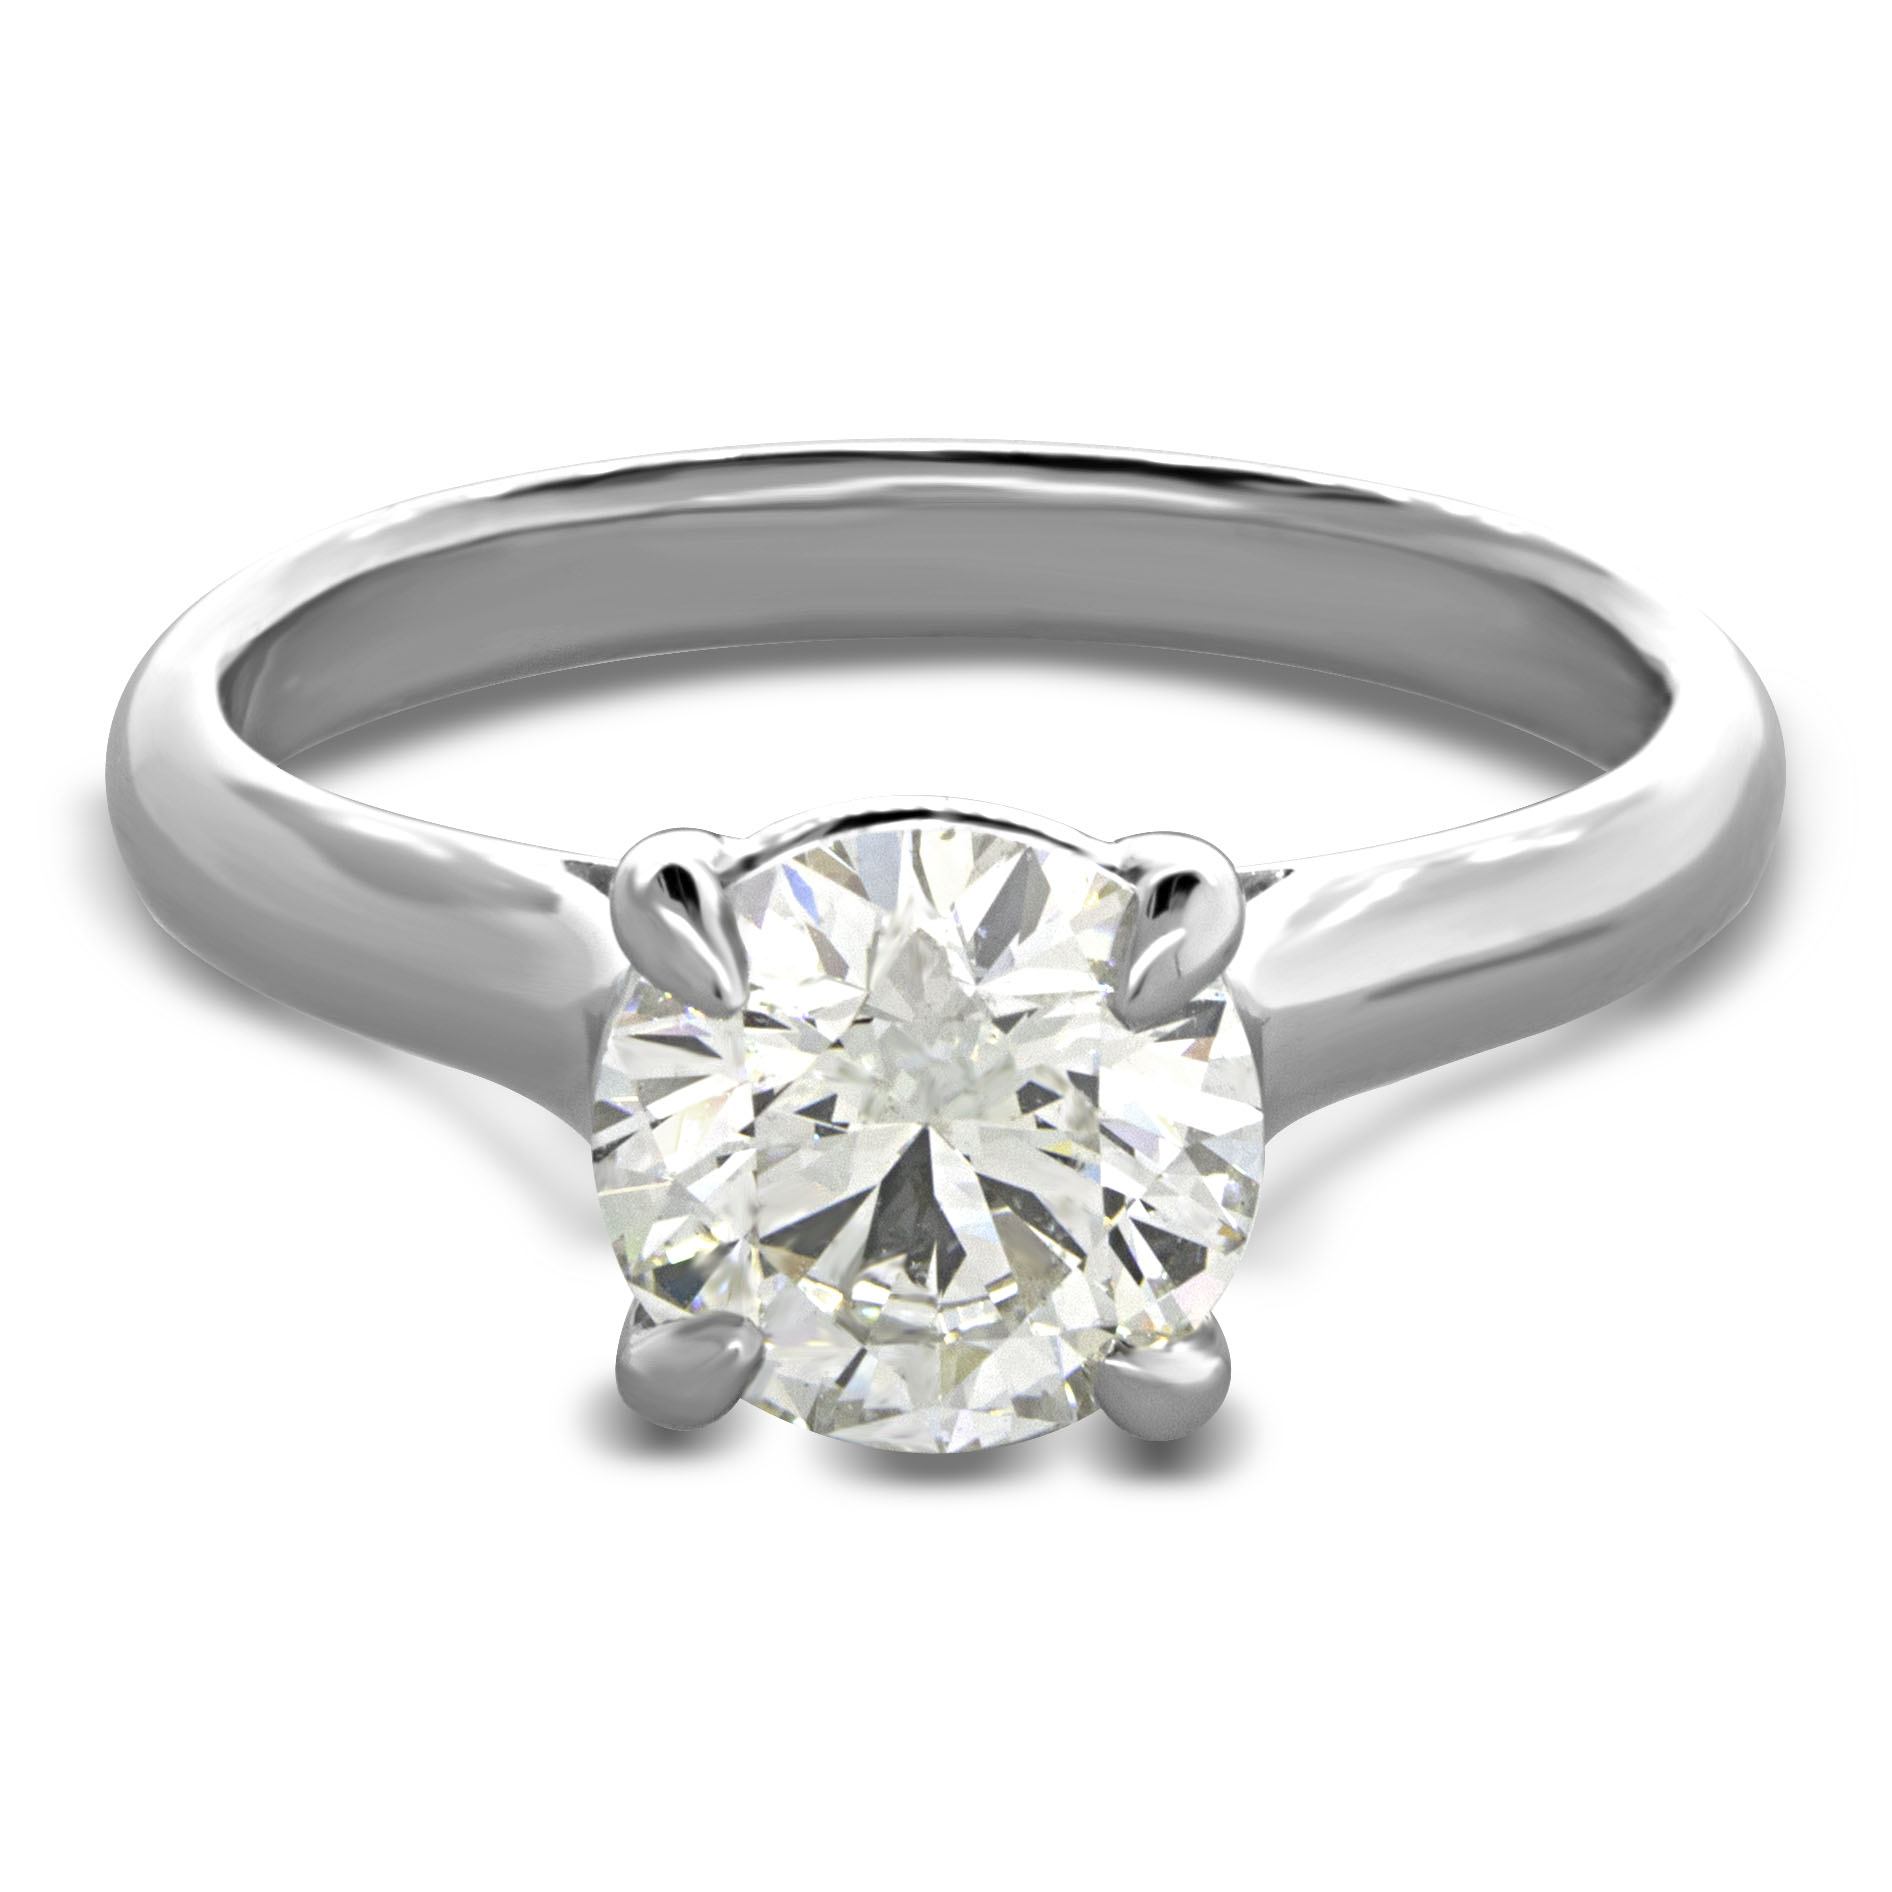 Eagle prong diamond engagement ring LR7776-S-EP -1